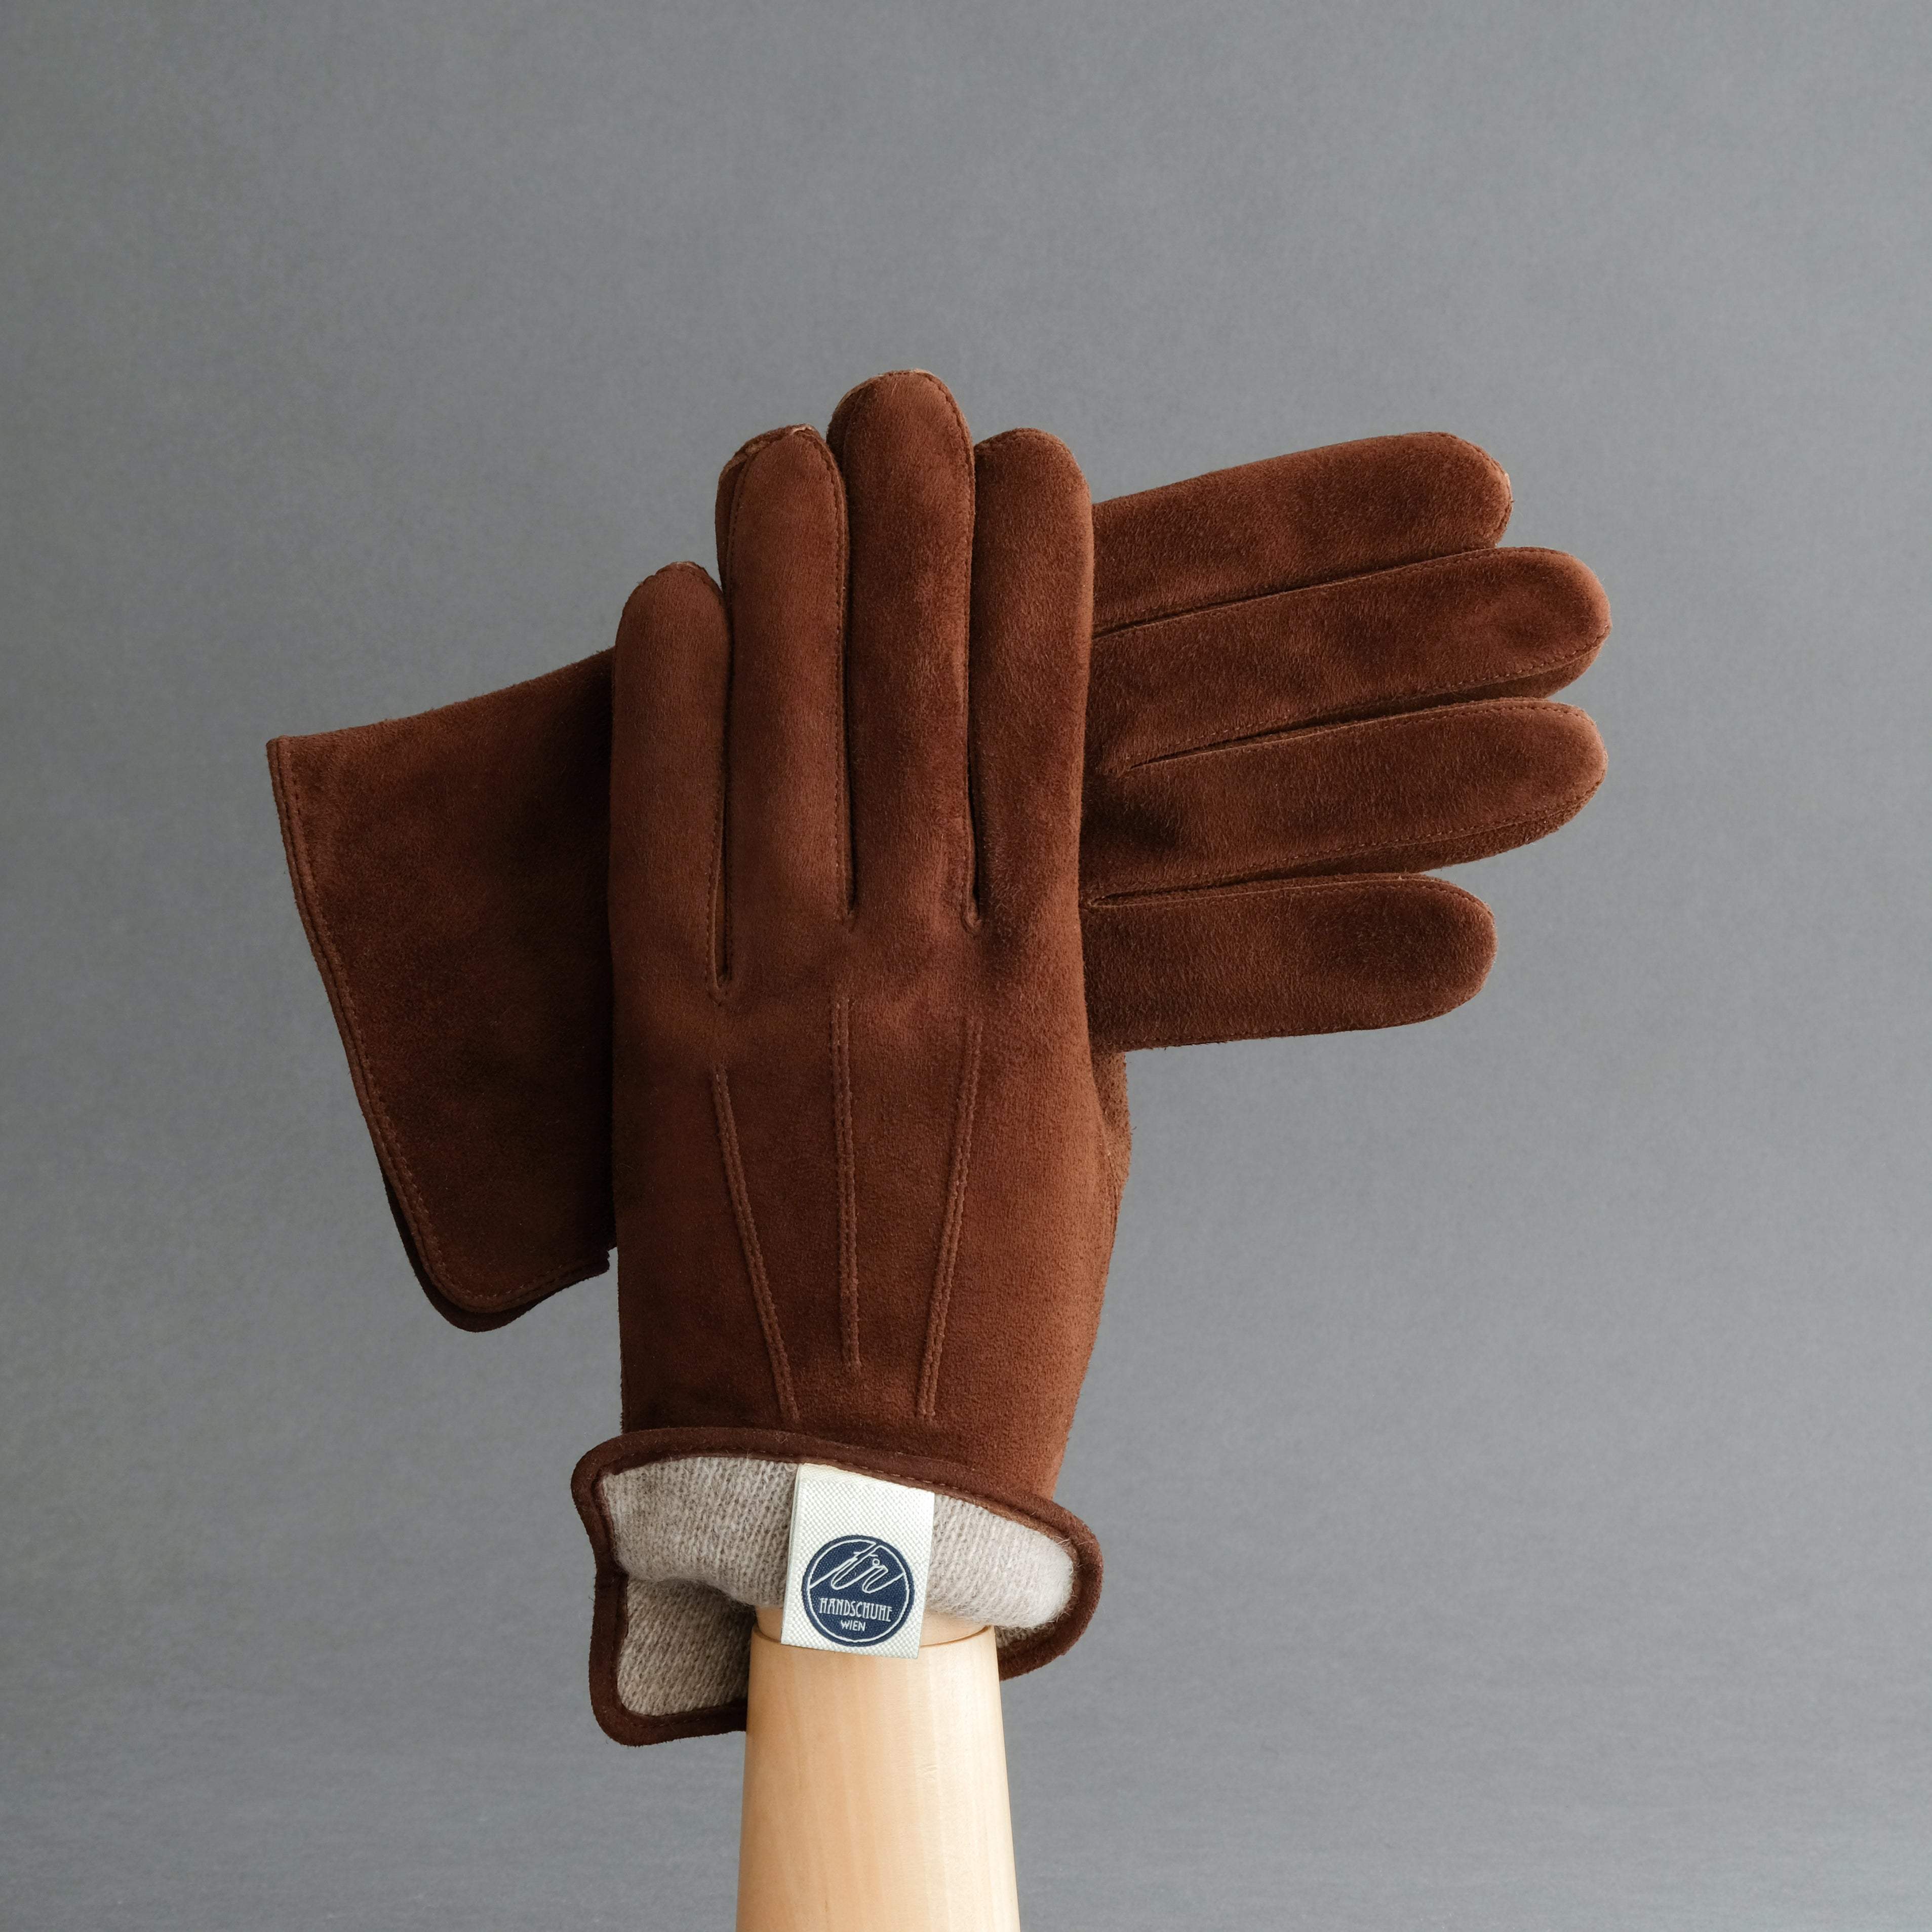 Gentlemen's Gloves from Chocolate Brown Goatskin Lined with Cashmere - TR Handschuhe Wien - Thomas Riemer Handmade Gloves